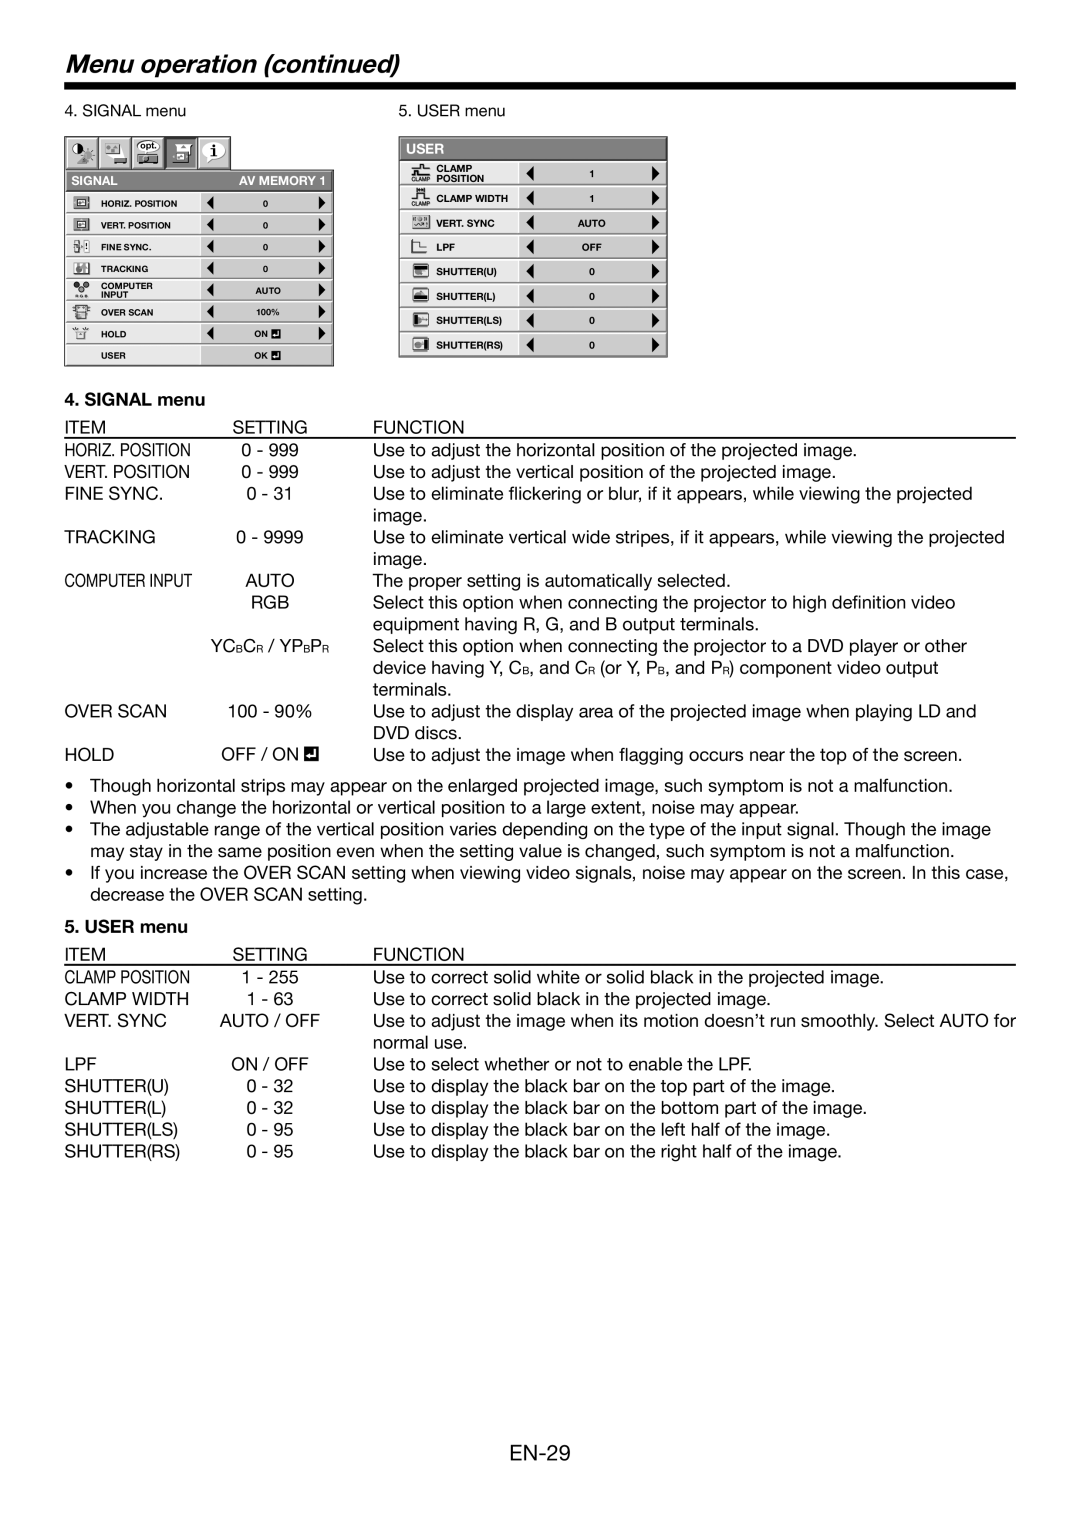 Mitsubishi Electronics HC6800 user manual Menu operation continued, EN-29, SIGNAL menu, USER menu 